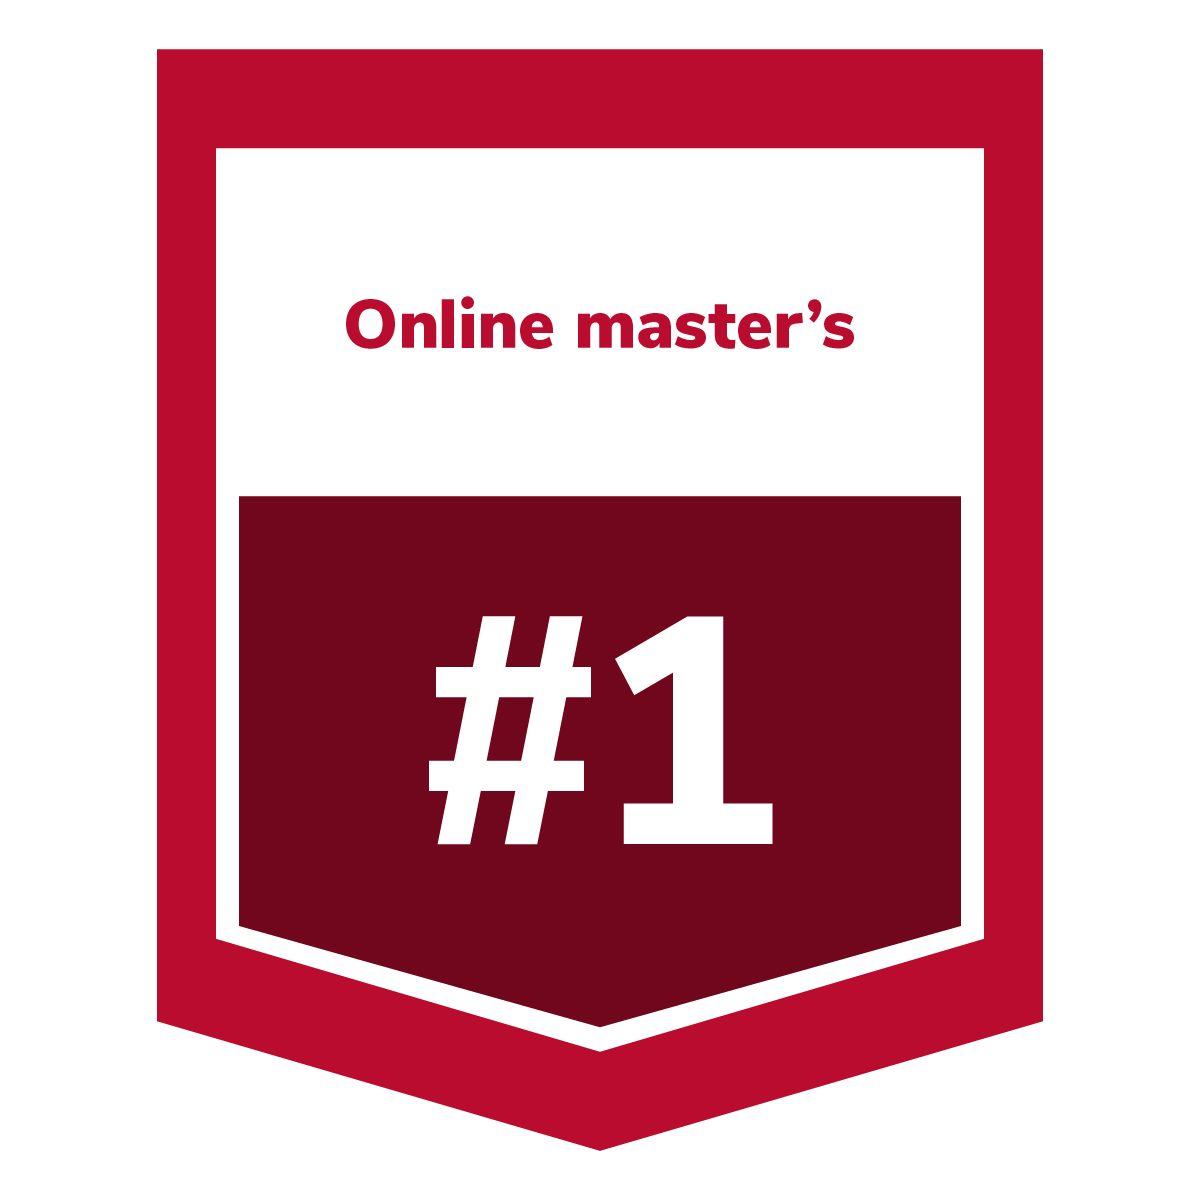 Online Master's #1 illustrated banner